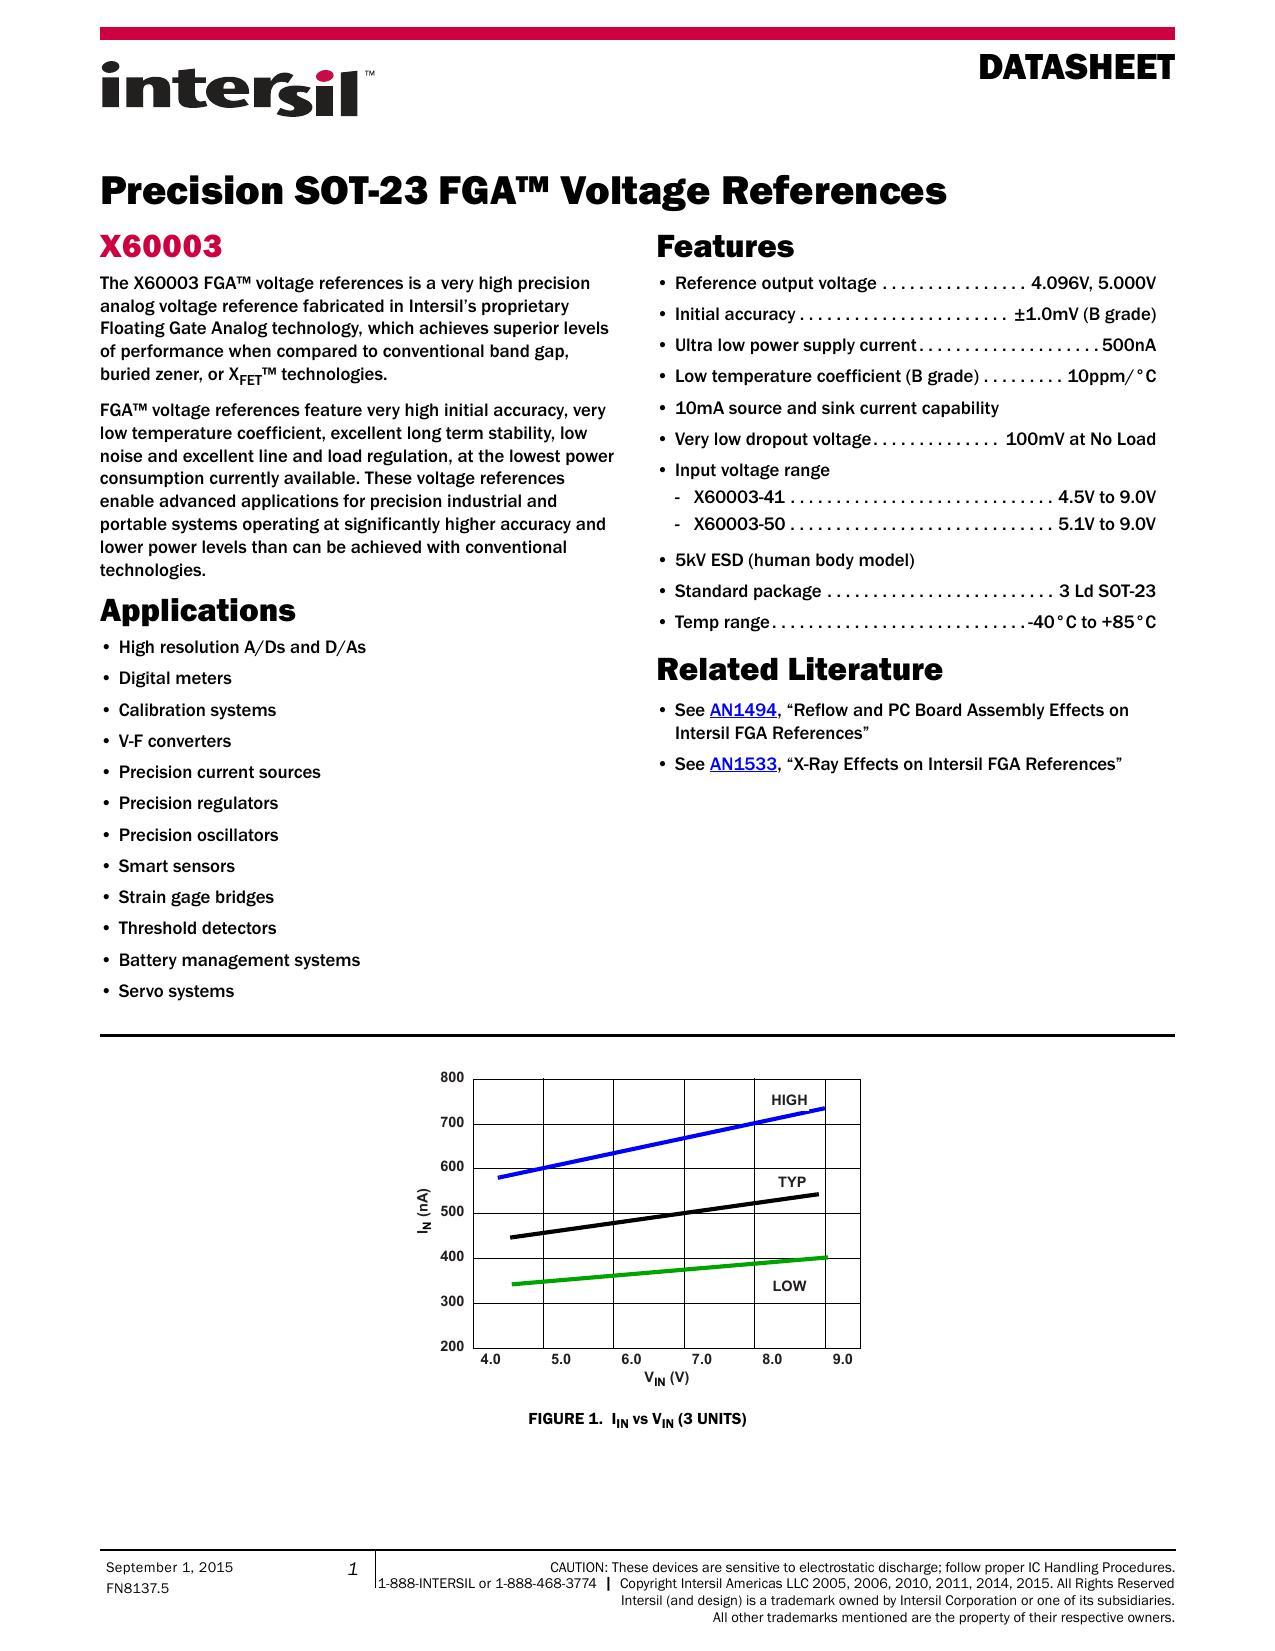 intersil-precision-sot-23-fgatm-voltage-references-x60003.pdf